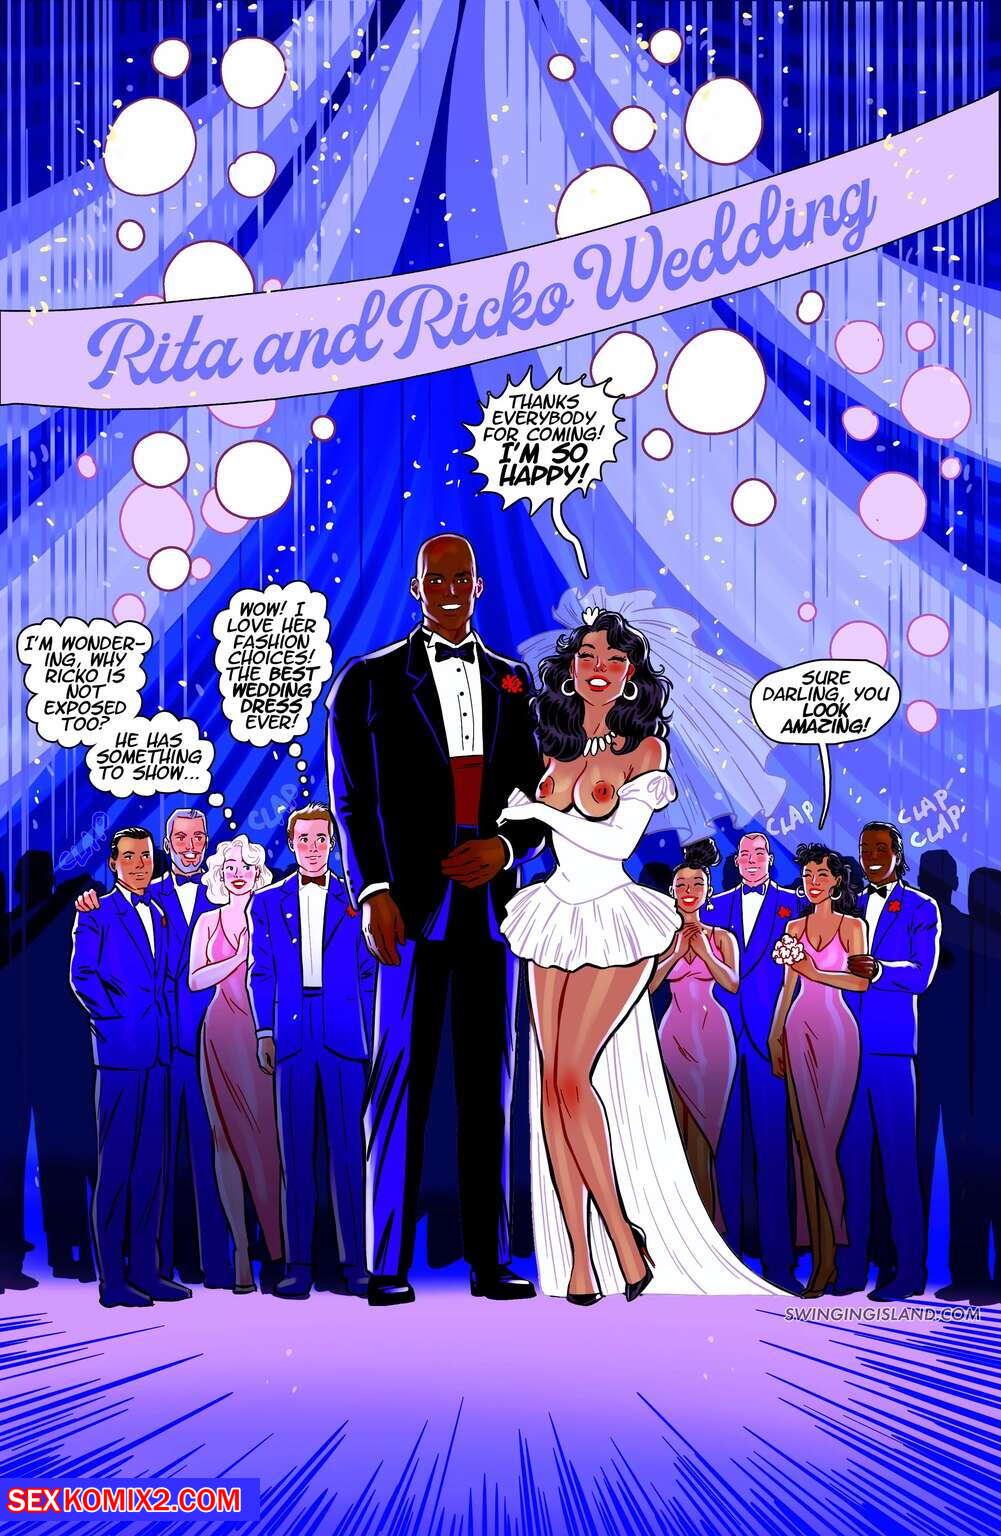 Interracial Fuck Party Wedding - âœ…ï¸ Porn comic Swinging Island. Rita and Ricko wedding. Andrew Tarusov Sex  comic guy and the | Porn comics in English for adults only | sexkomix2.com